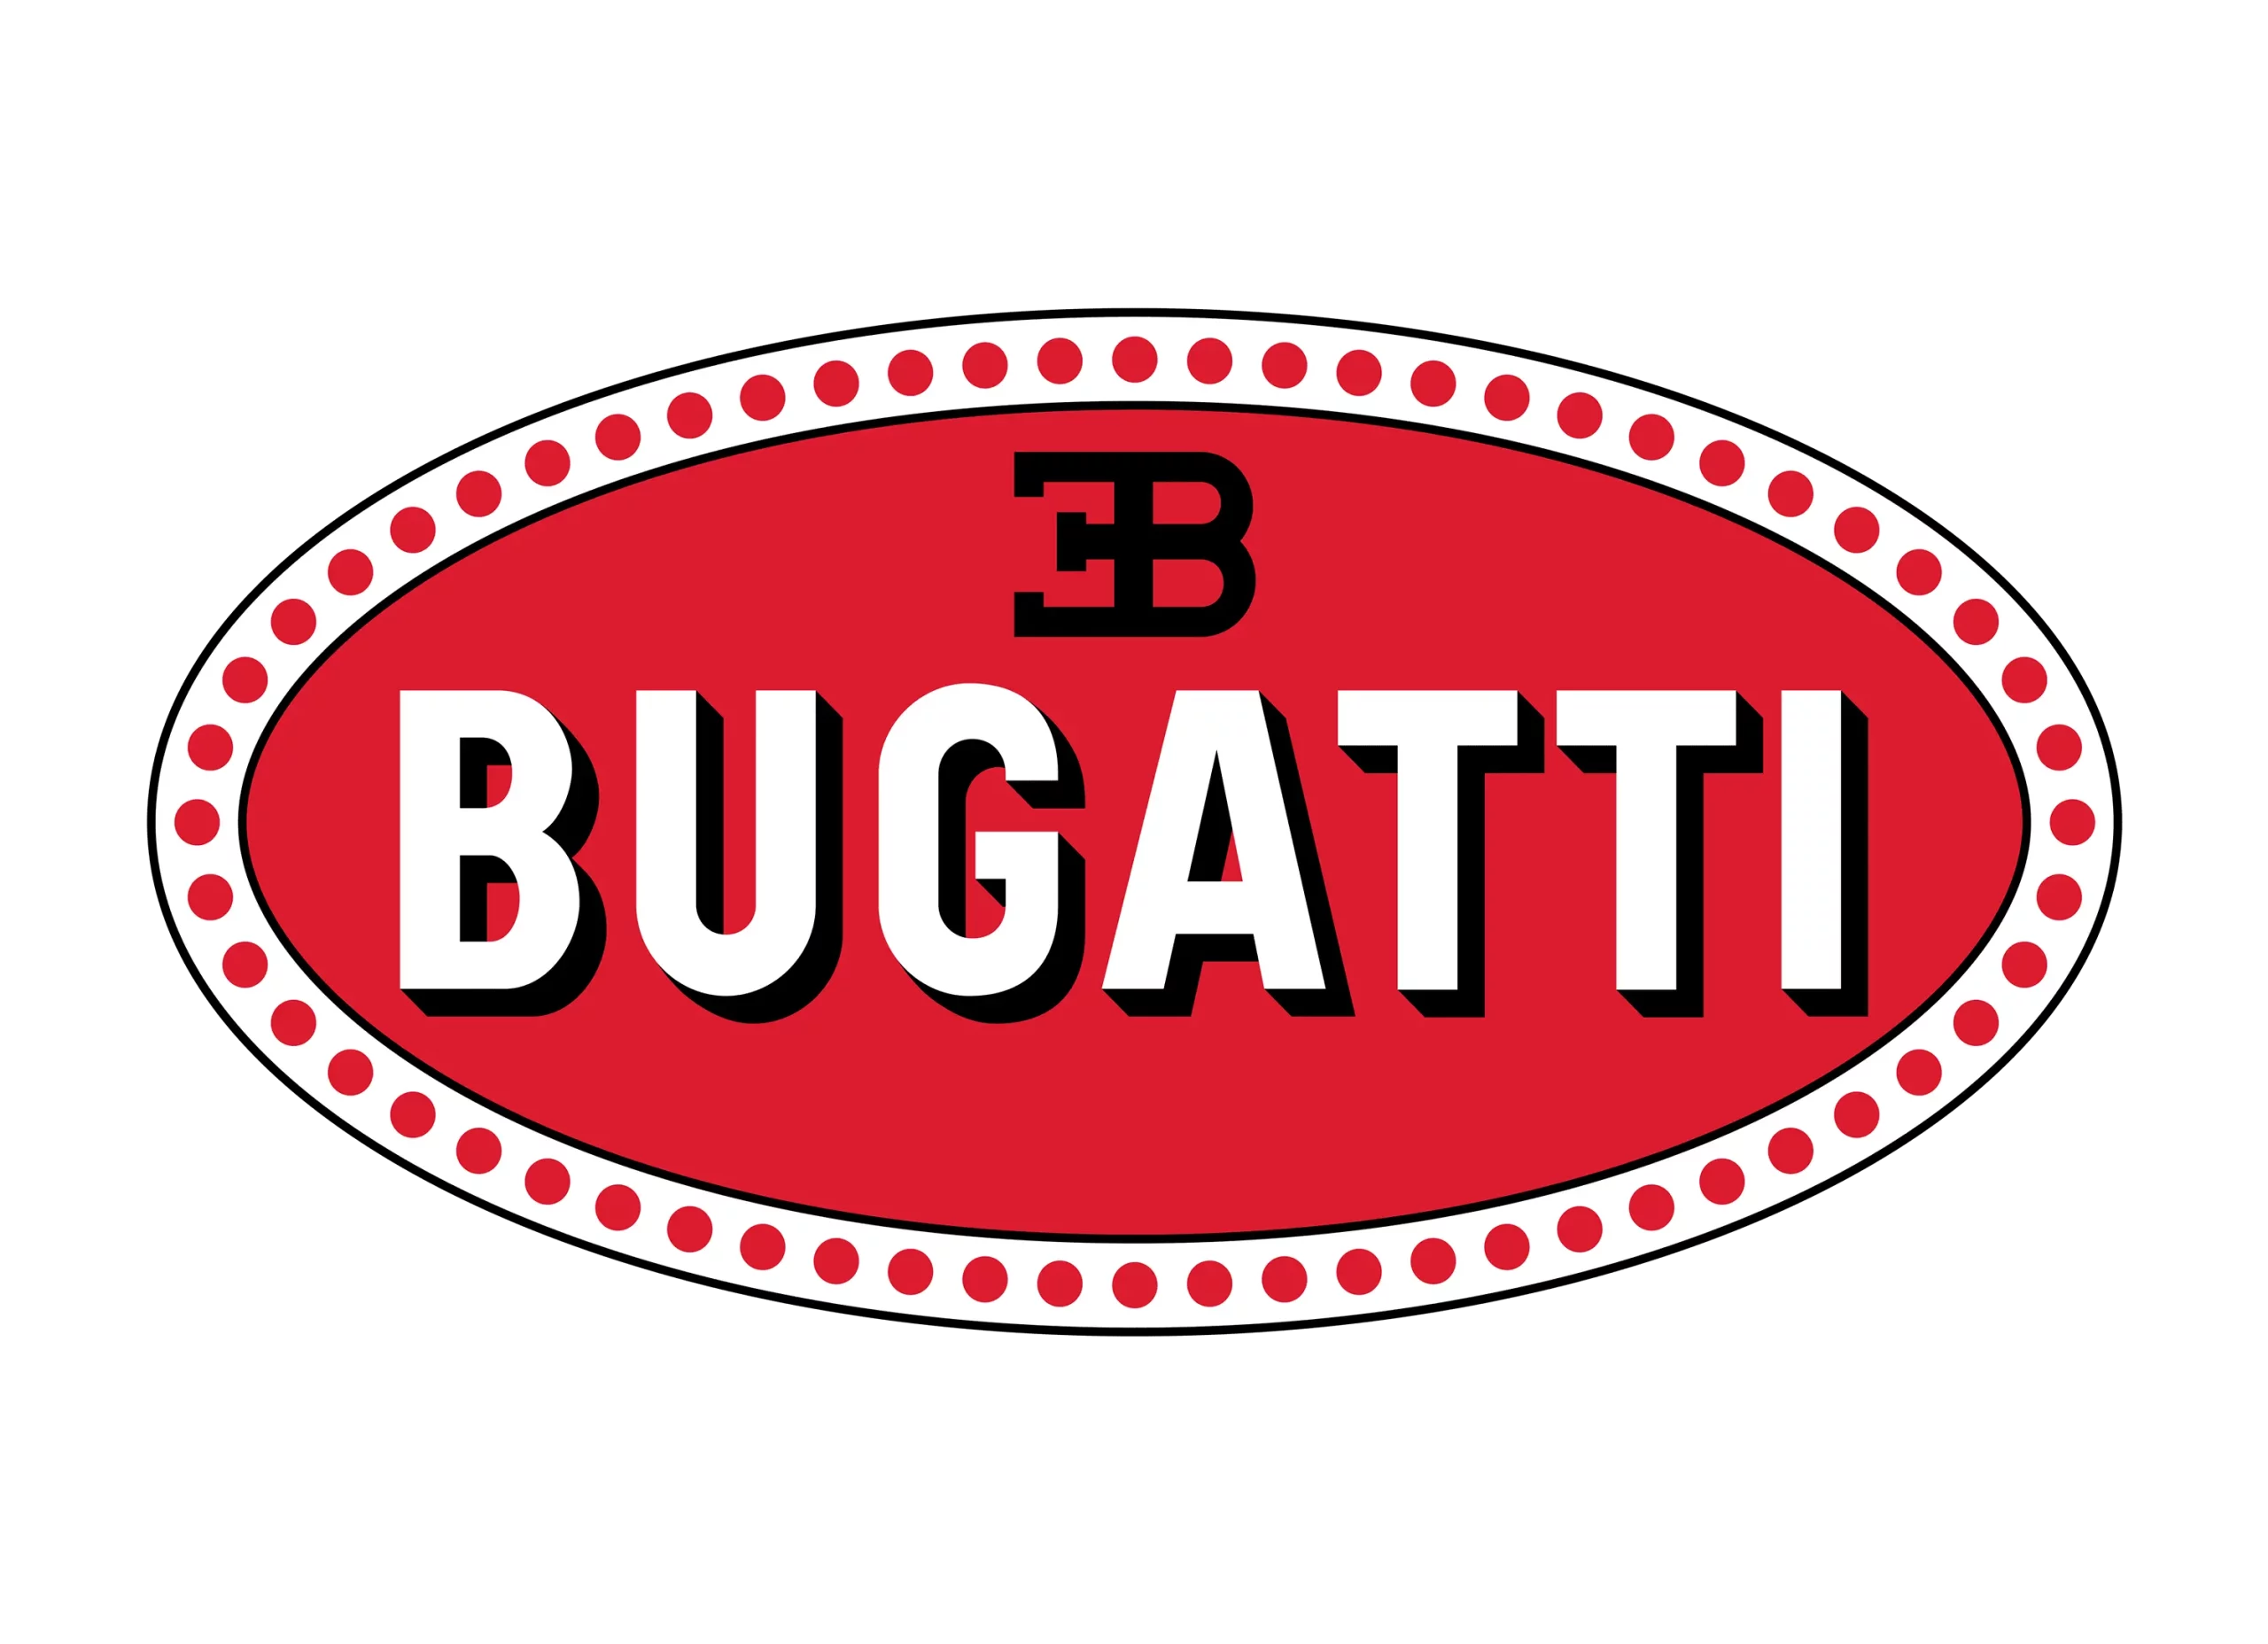 Bugatti logo 1963 -2007